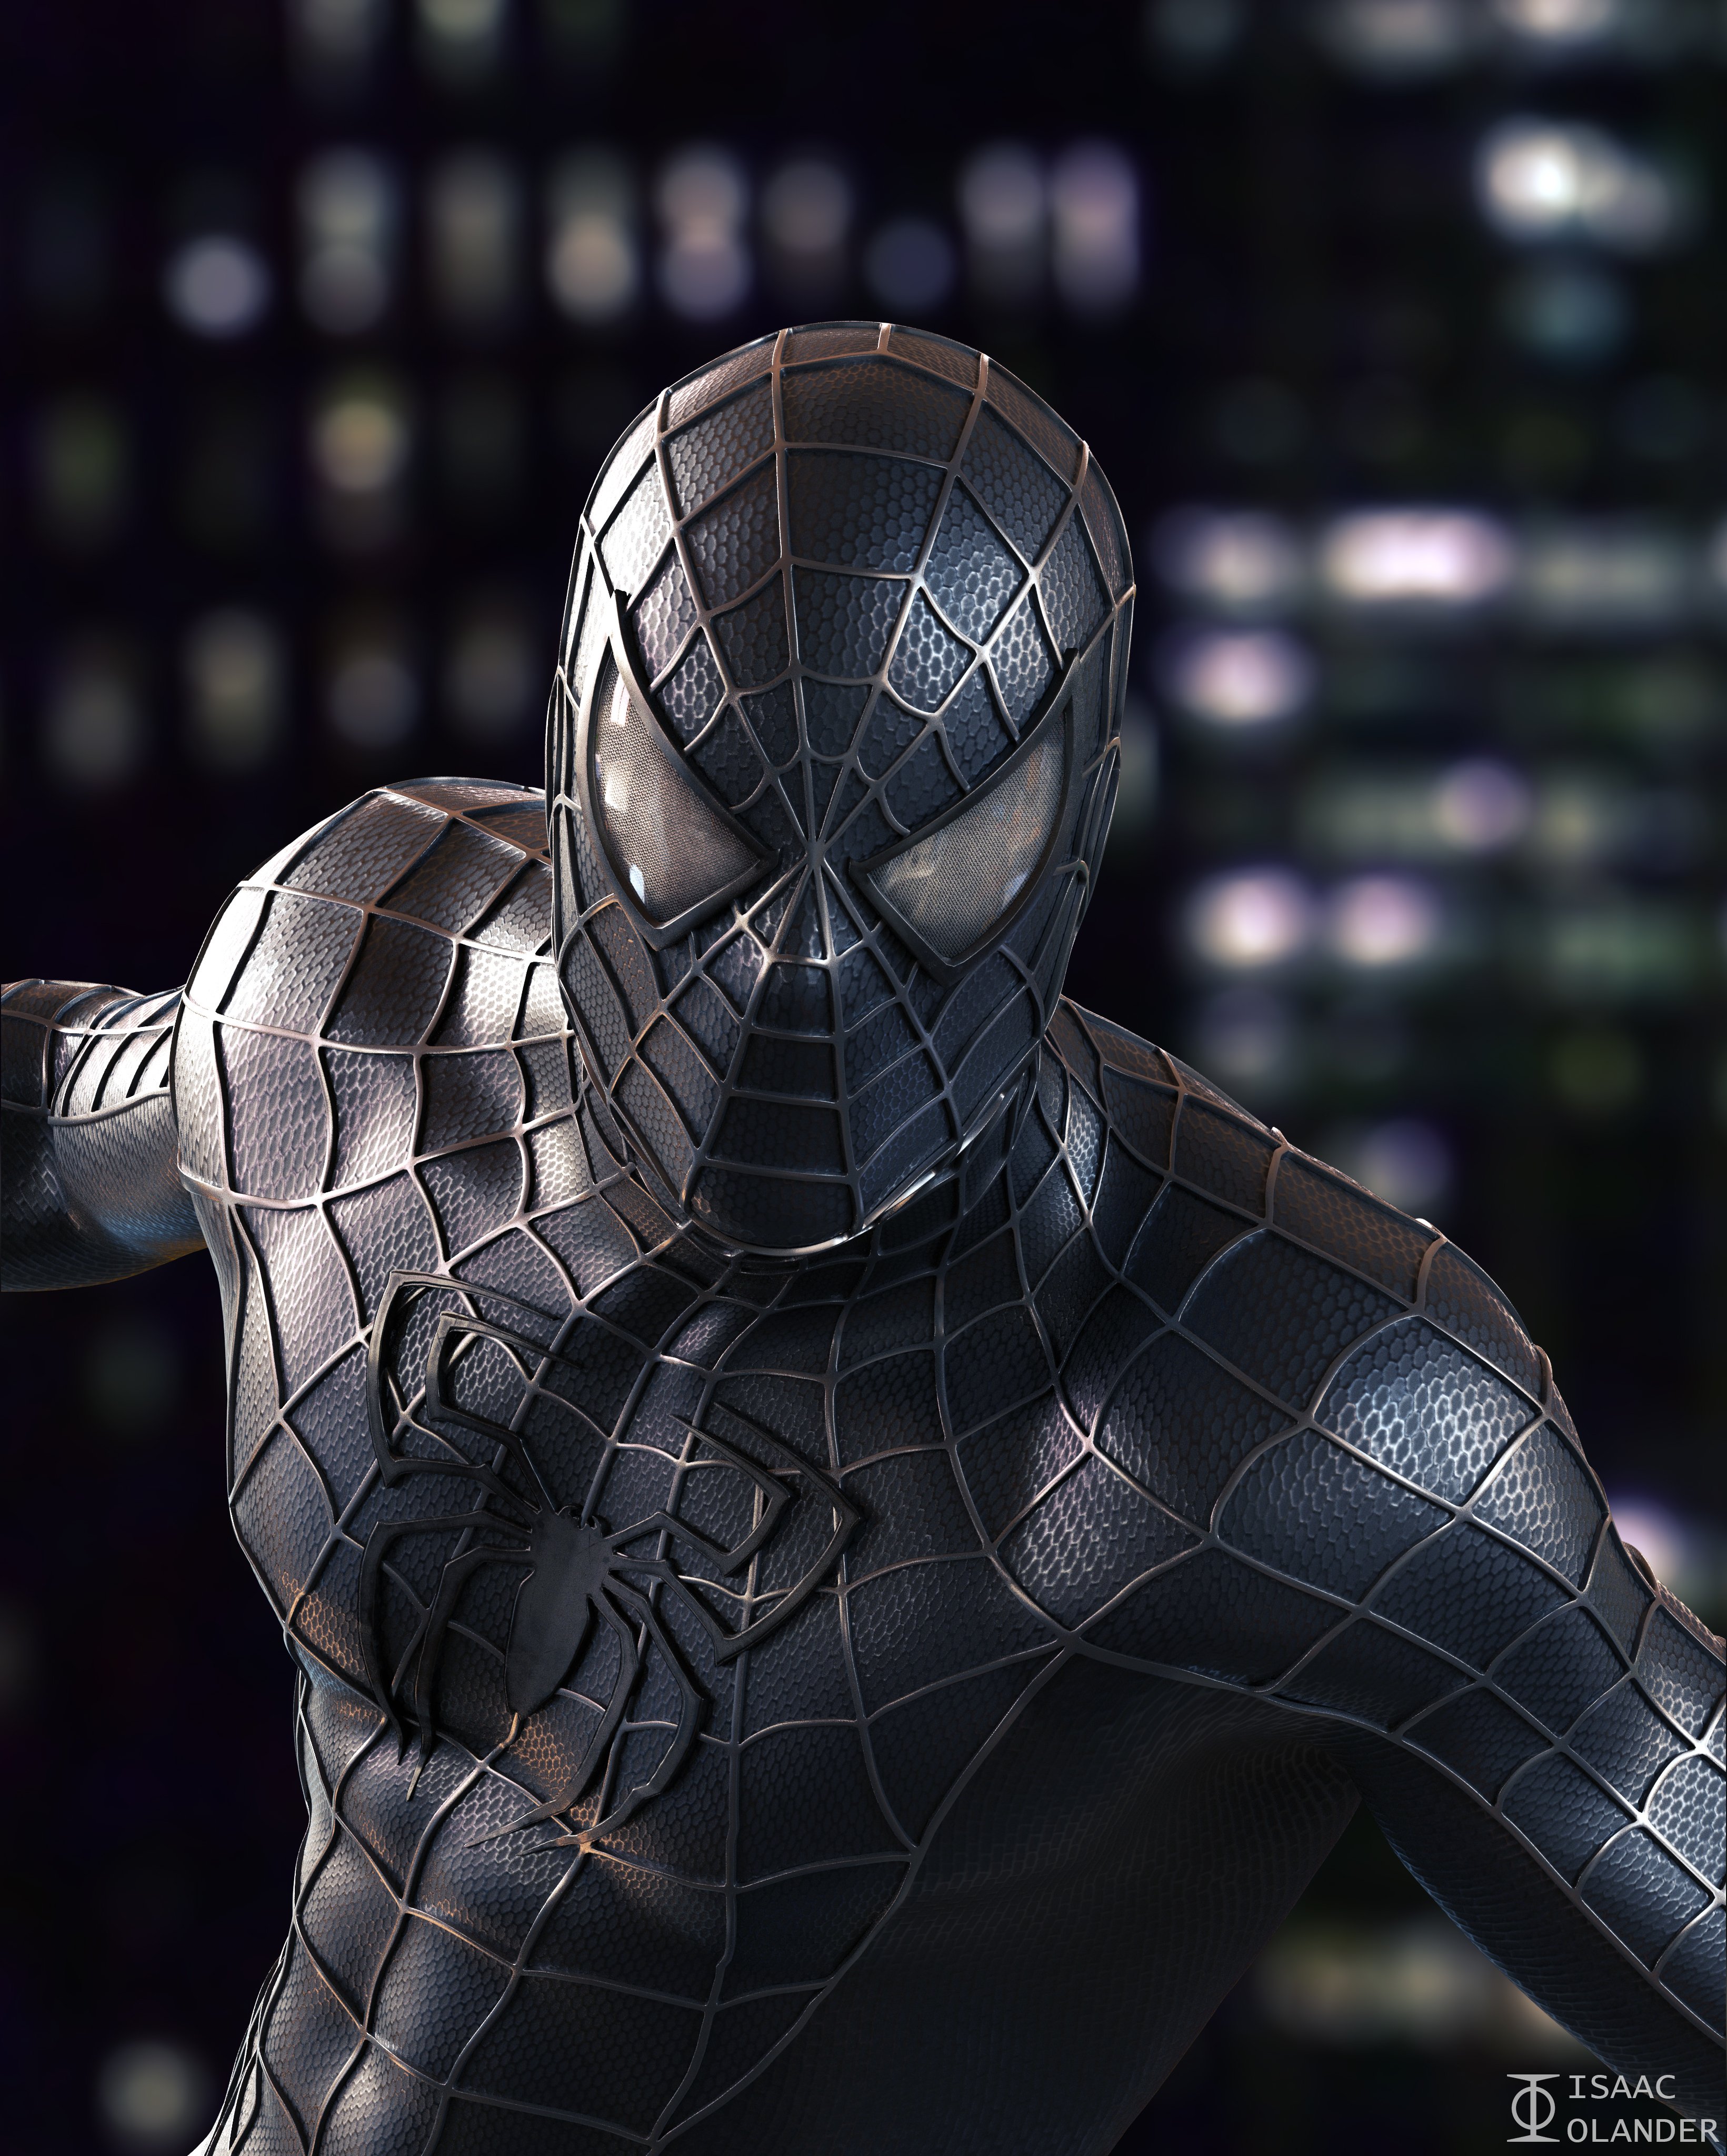 Isaac Olander Suit 4K Wallpaper and more on Arstation Updates on Instagram #Spiderman #Marvel